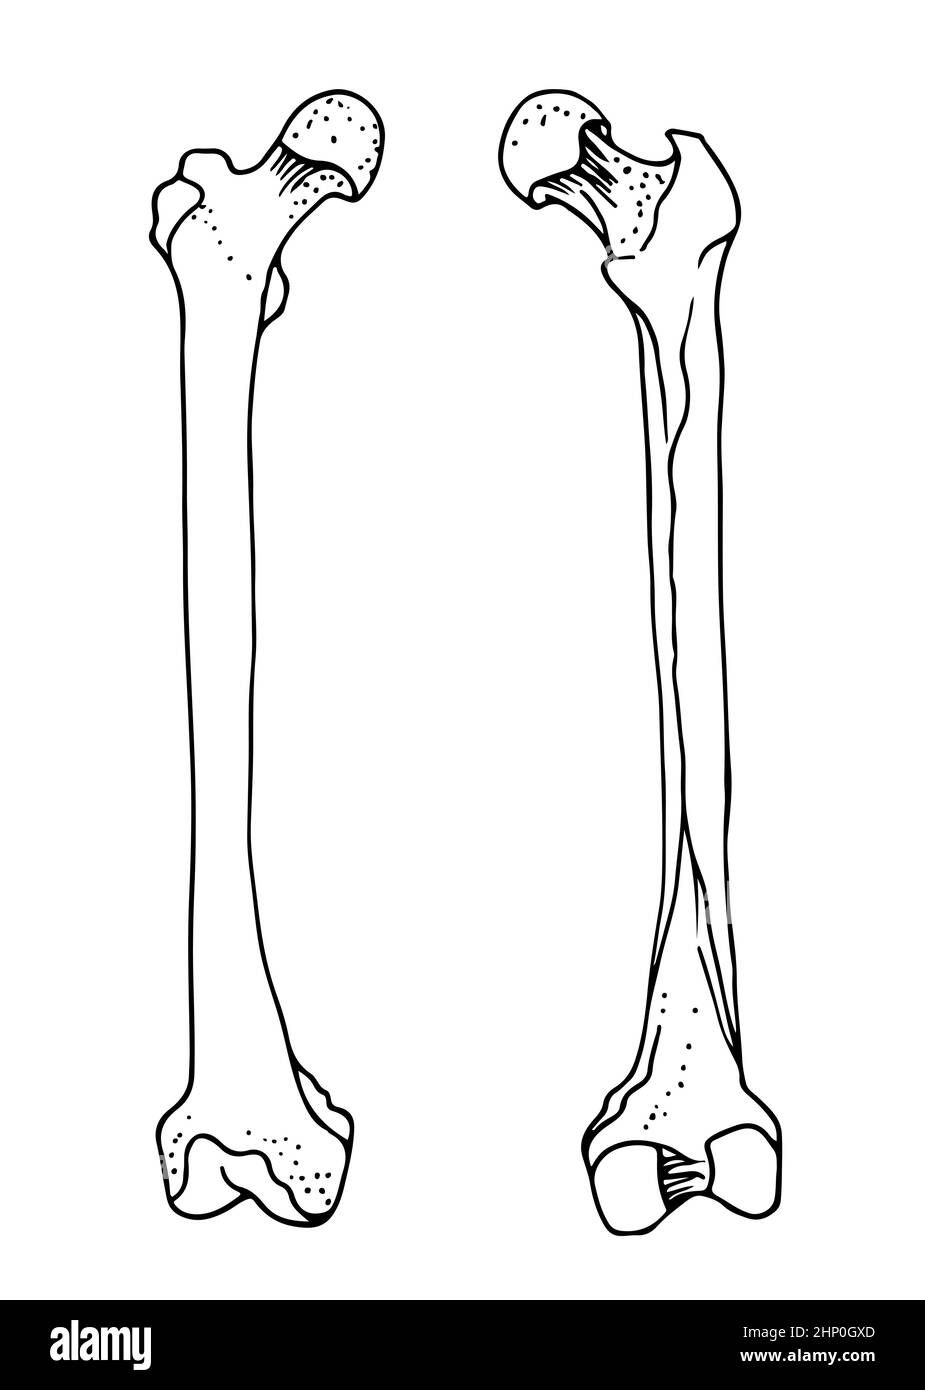 Human Femur Bones Vector Hand Drawn Illustration Isolated On A White